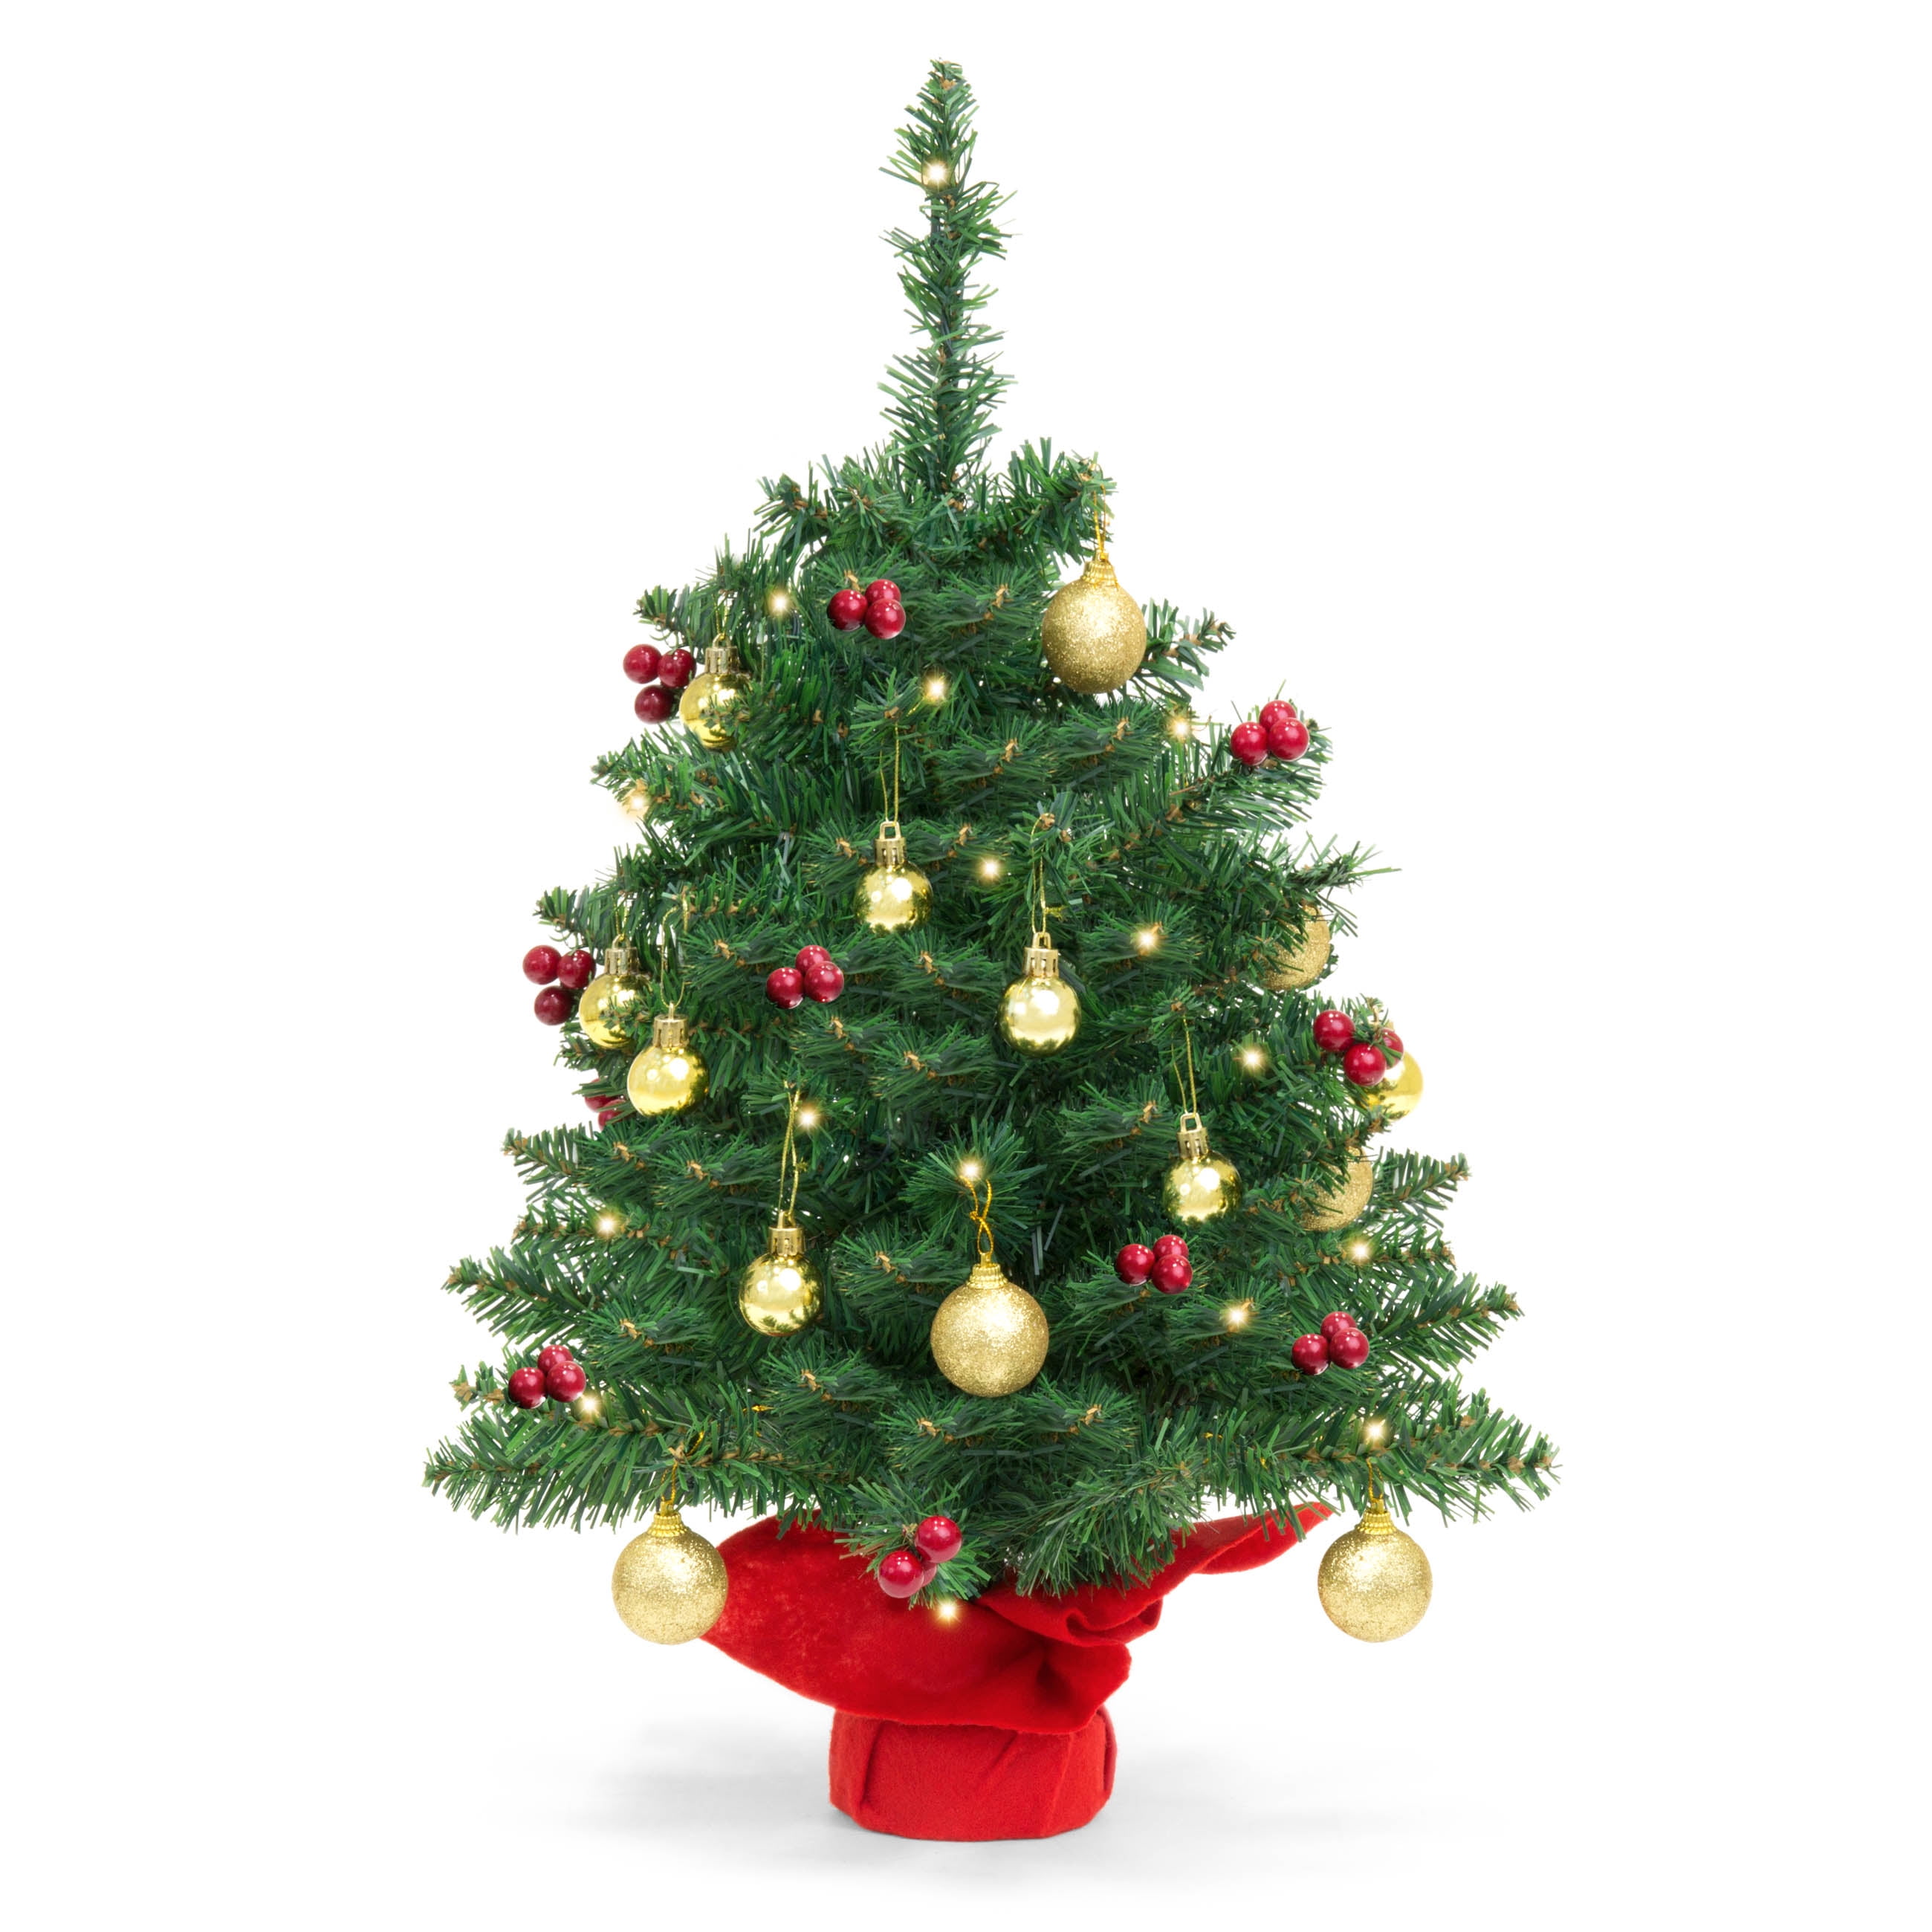 24pcs Tabletop Christmas Pine Tree Xmas Mini Snow Trees Small Party Decor Bu 